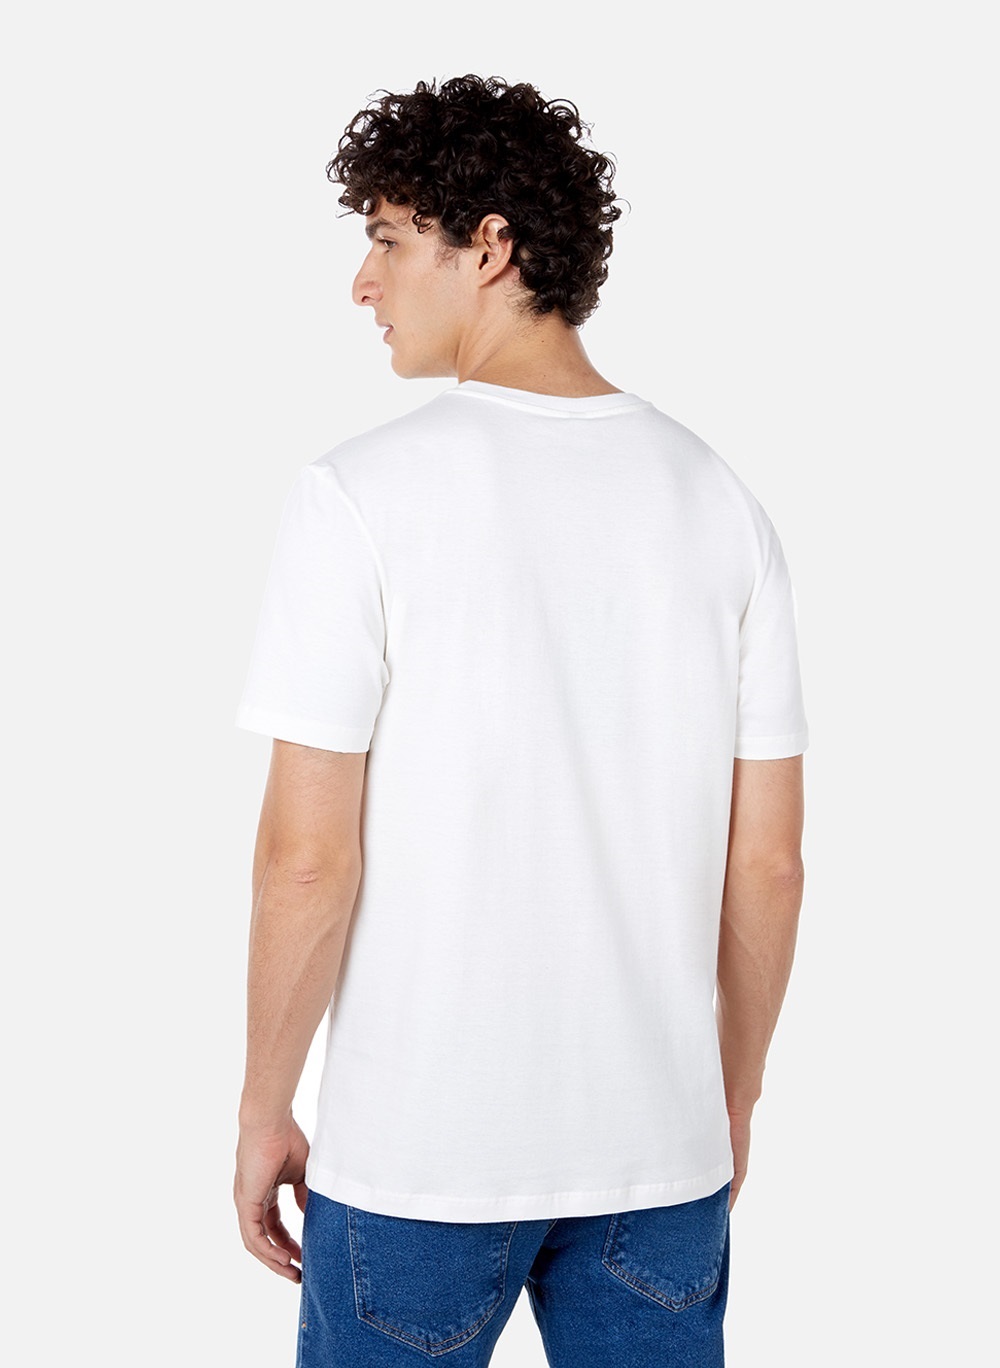 Camiseta John John Caveira Glossy Masculina - Gg - Branco - Carrefour